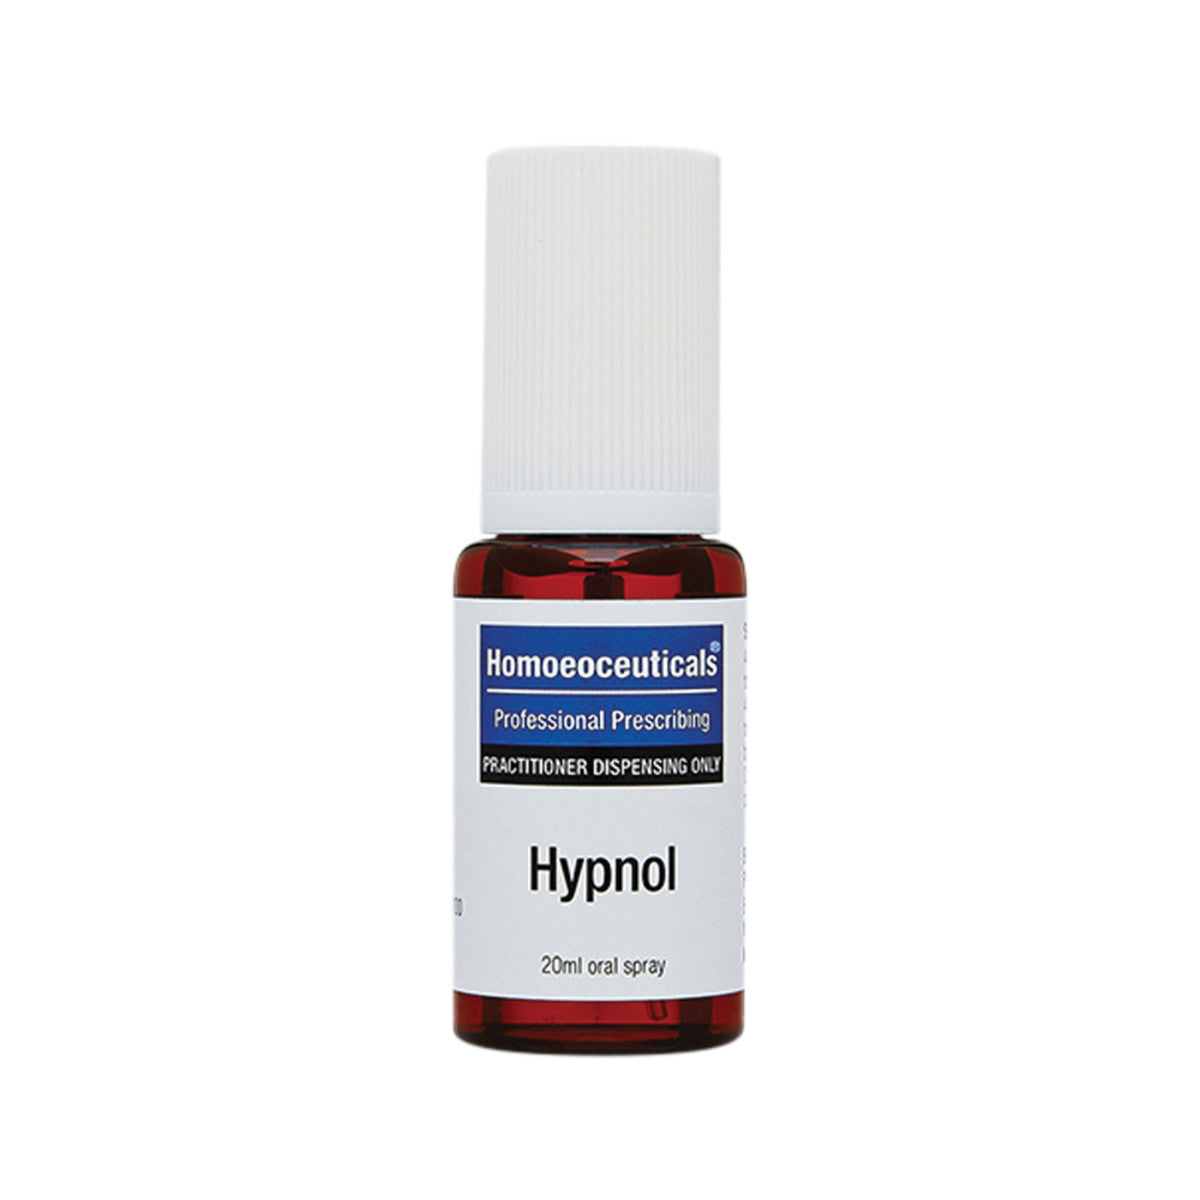 Homoeoceuticals - Hypnol Spray